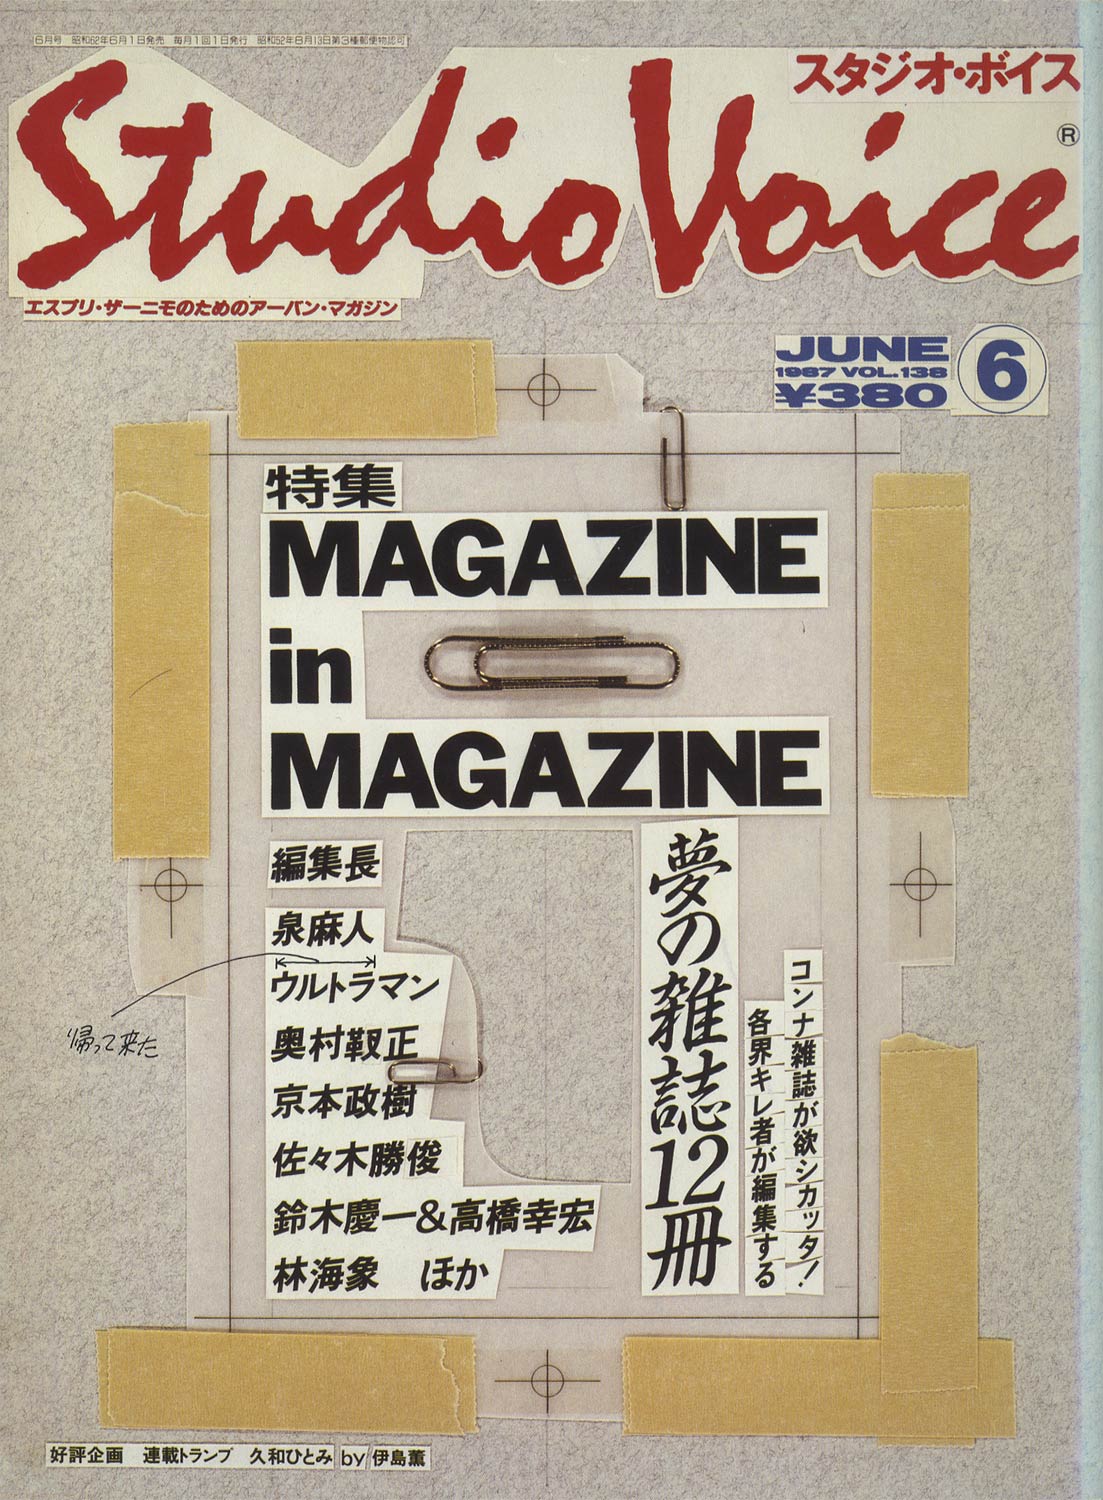 Studio Voice　スタジオ・ボイス June 1987 Vol.138